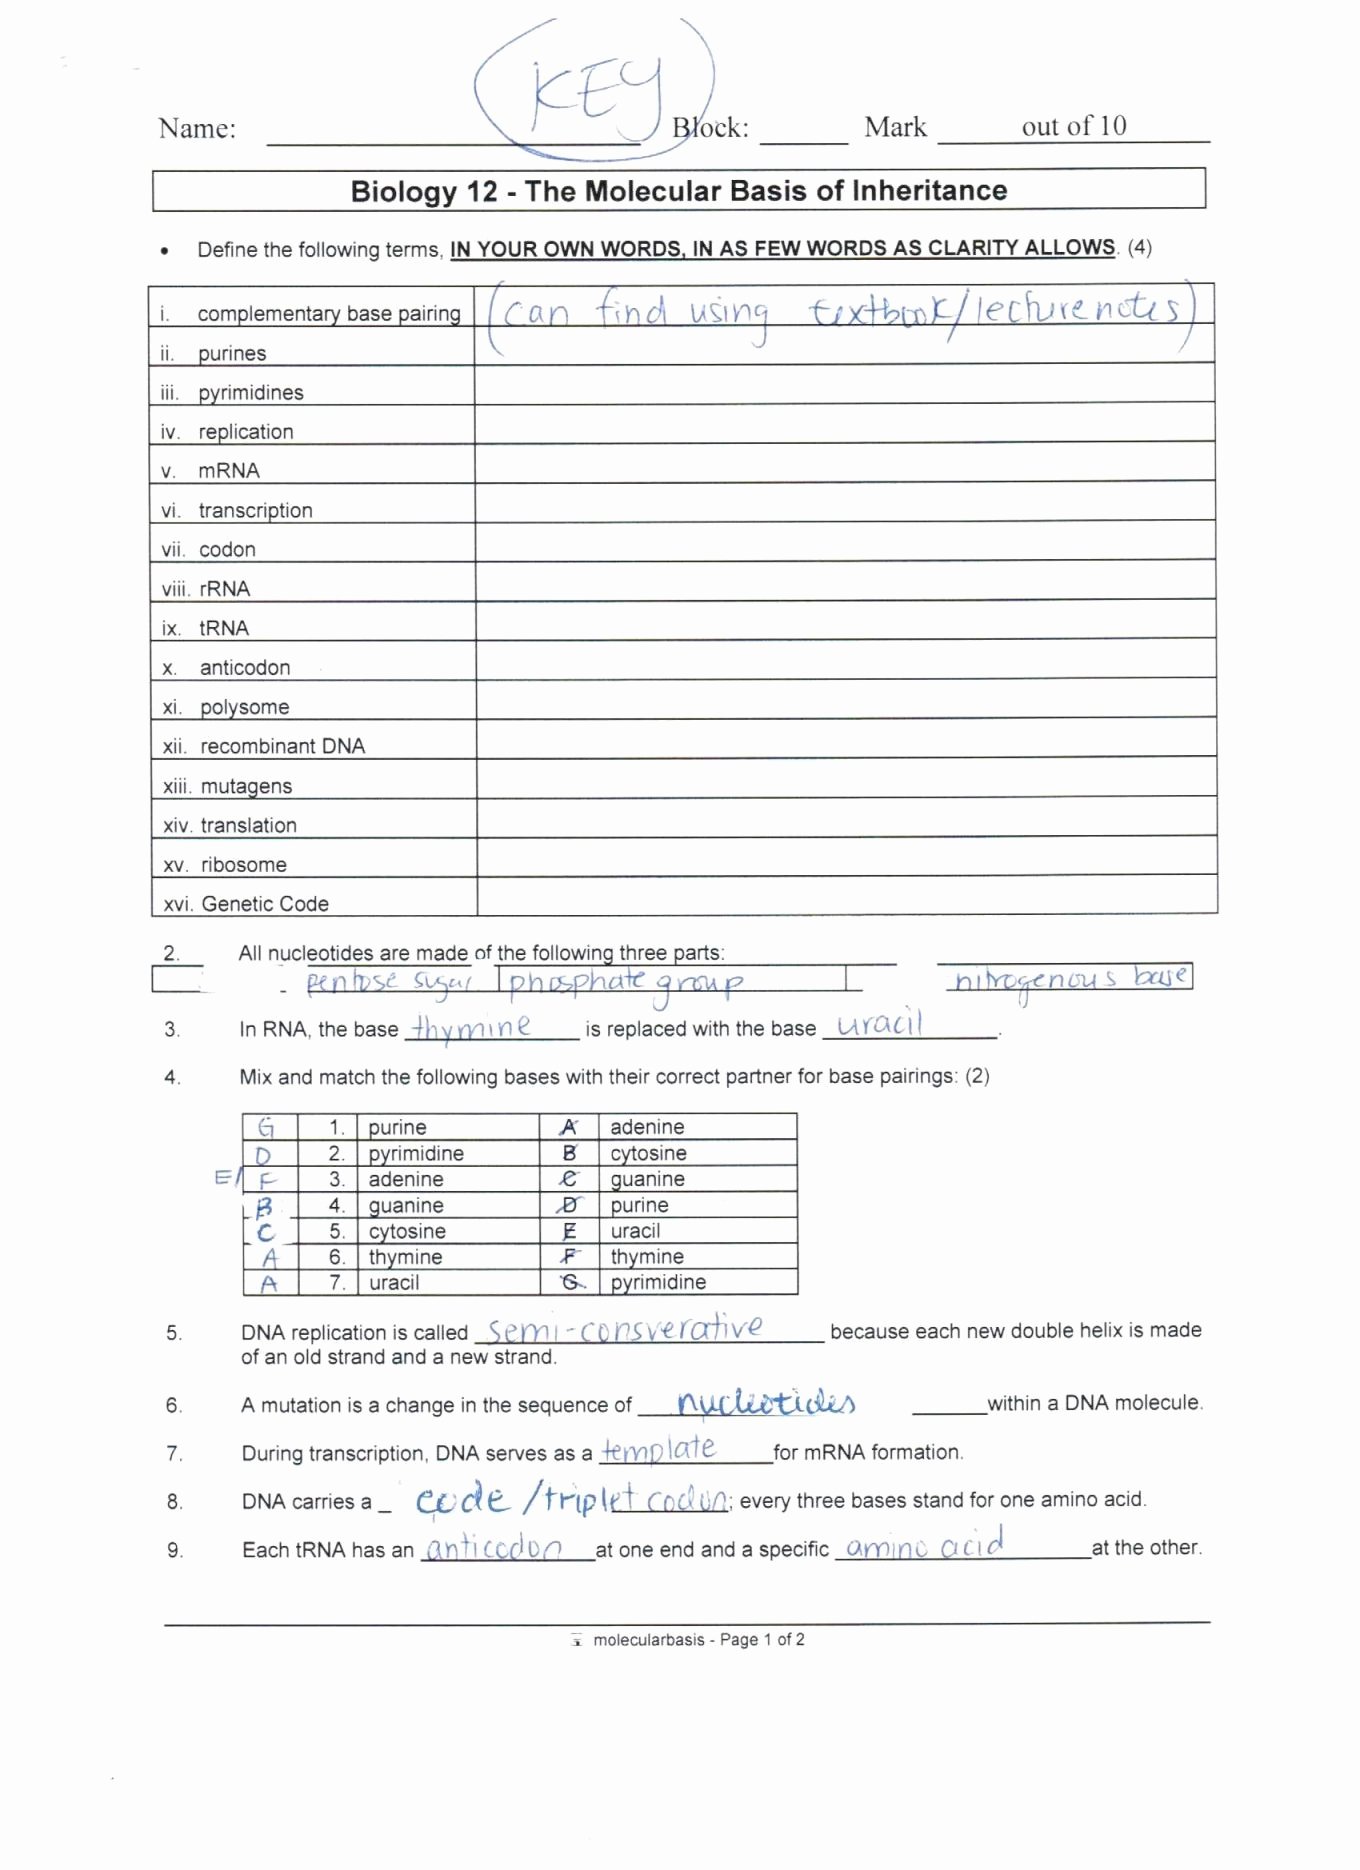 Dna Mutations Practice Worksheet Lovely Dna Mutations Practice Worksheet Conclusion Answers